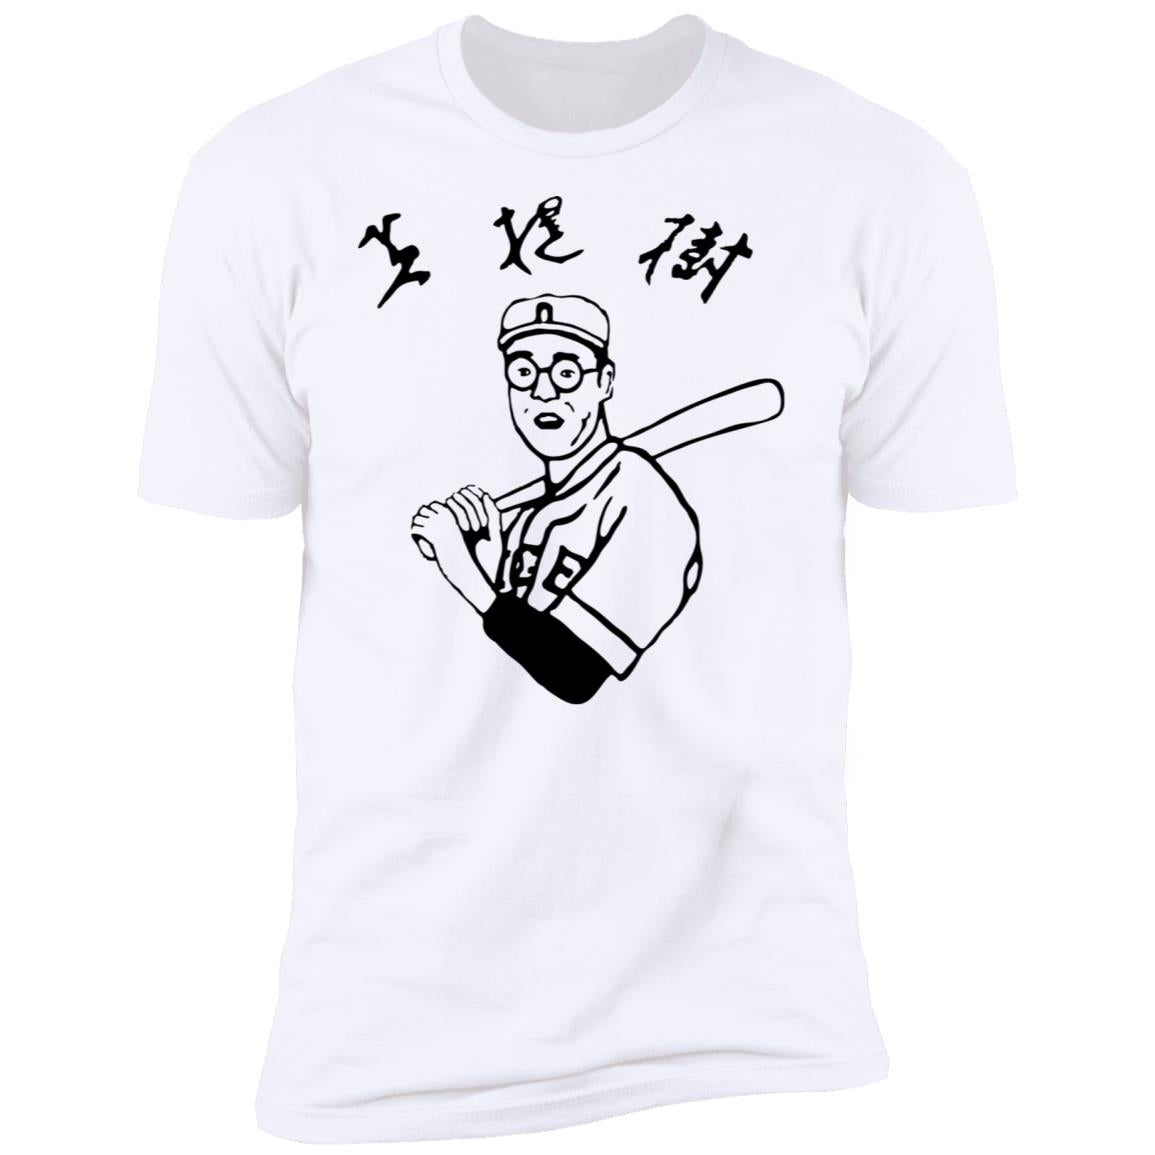 the dude baseball shirt